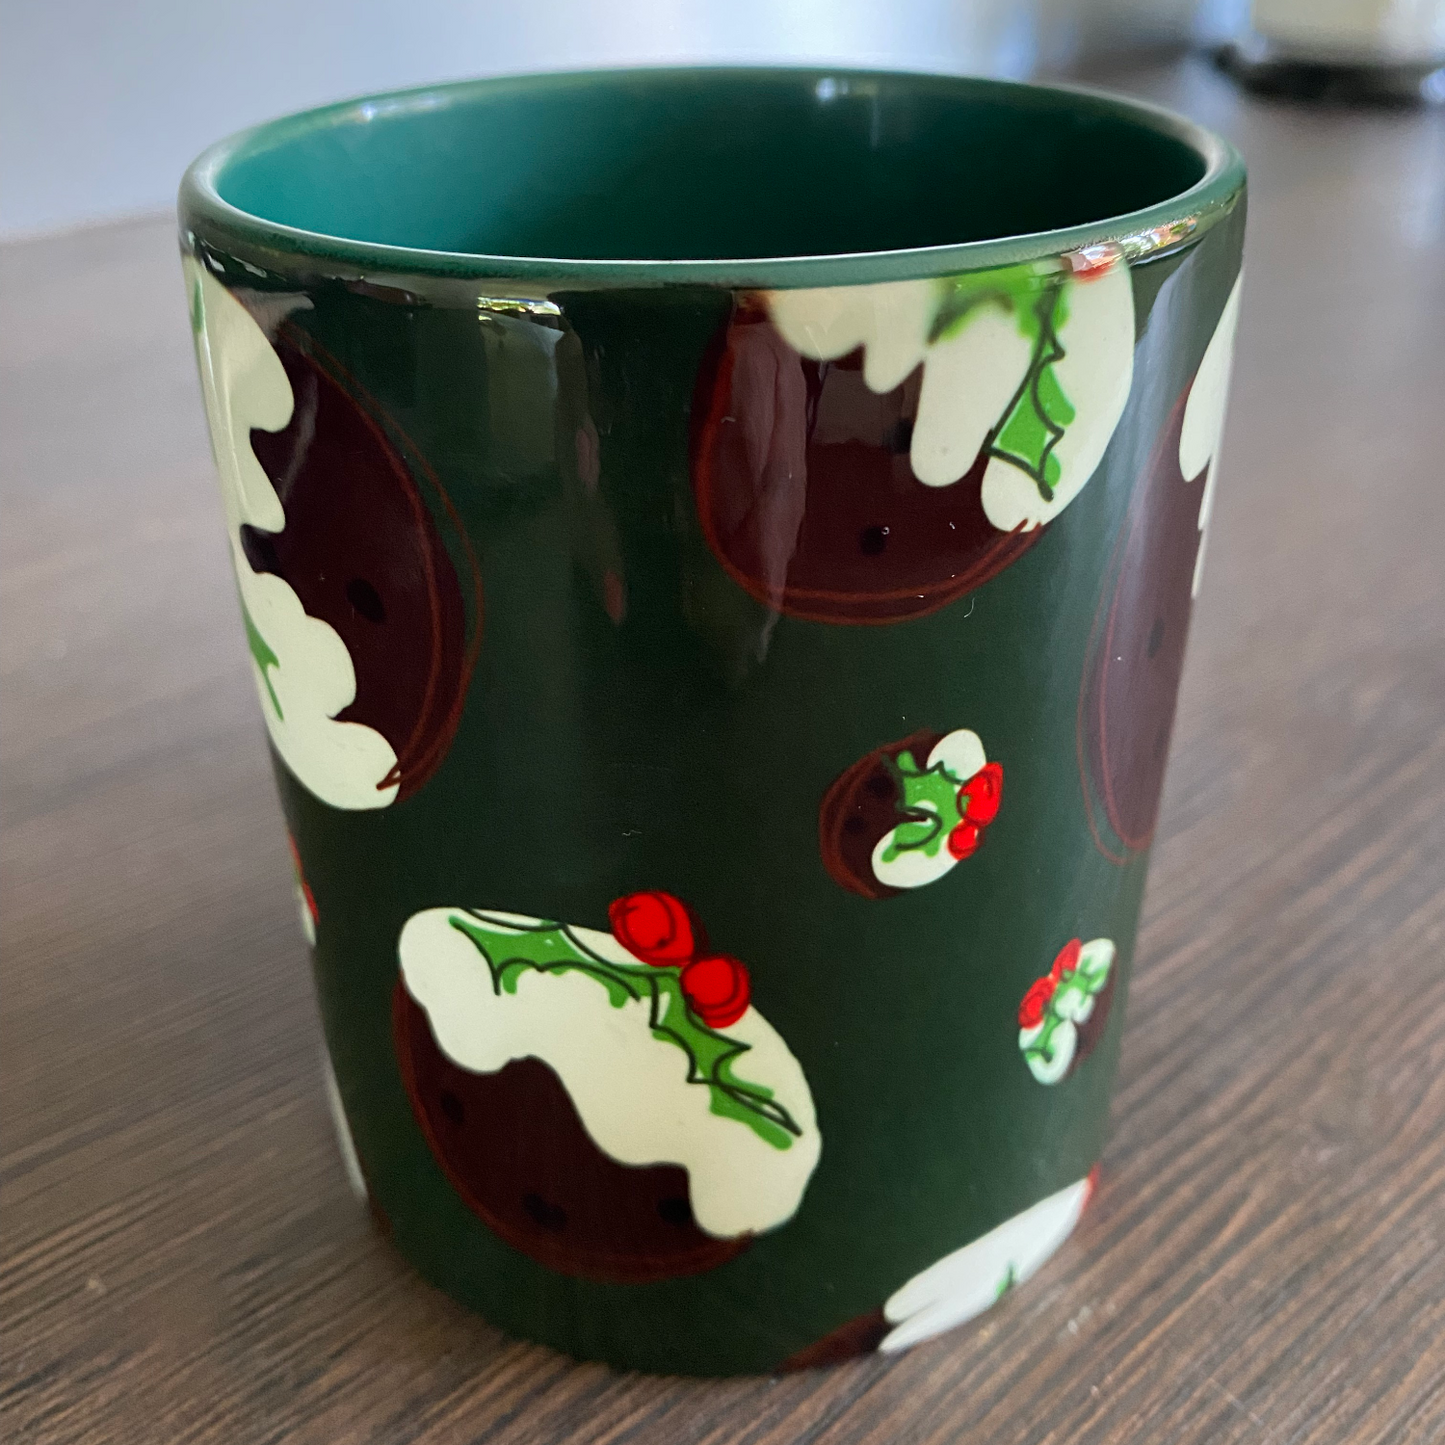 Christmas Pudding Mug - The Argentum Design Co